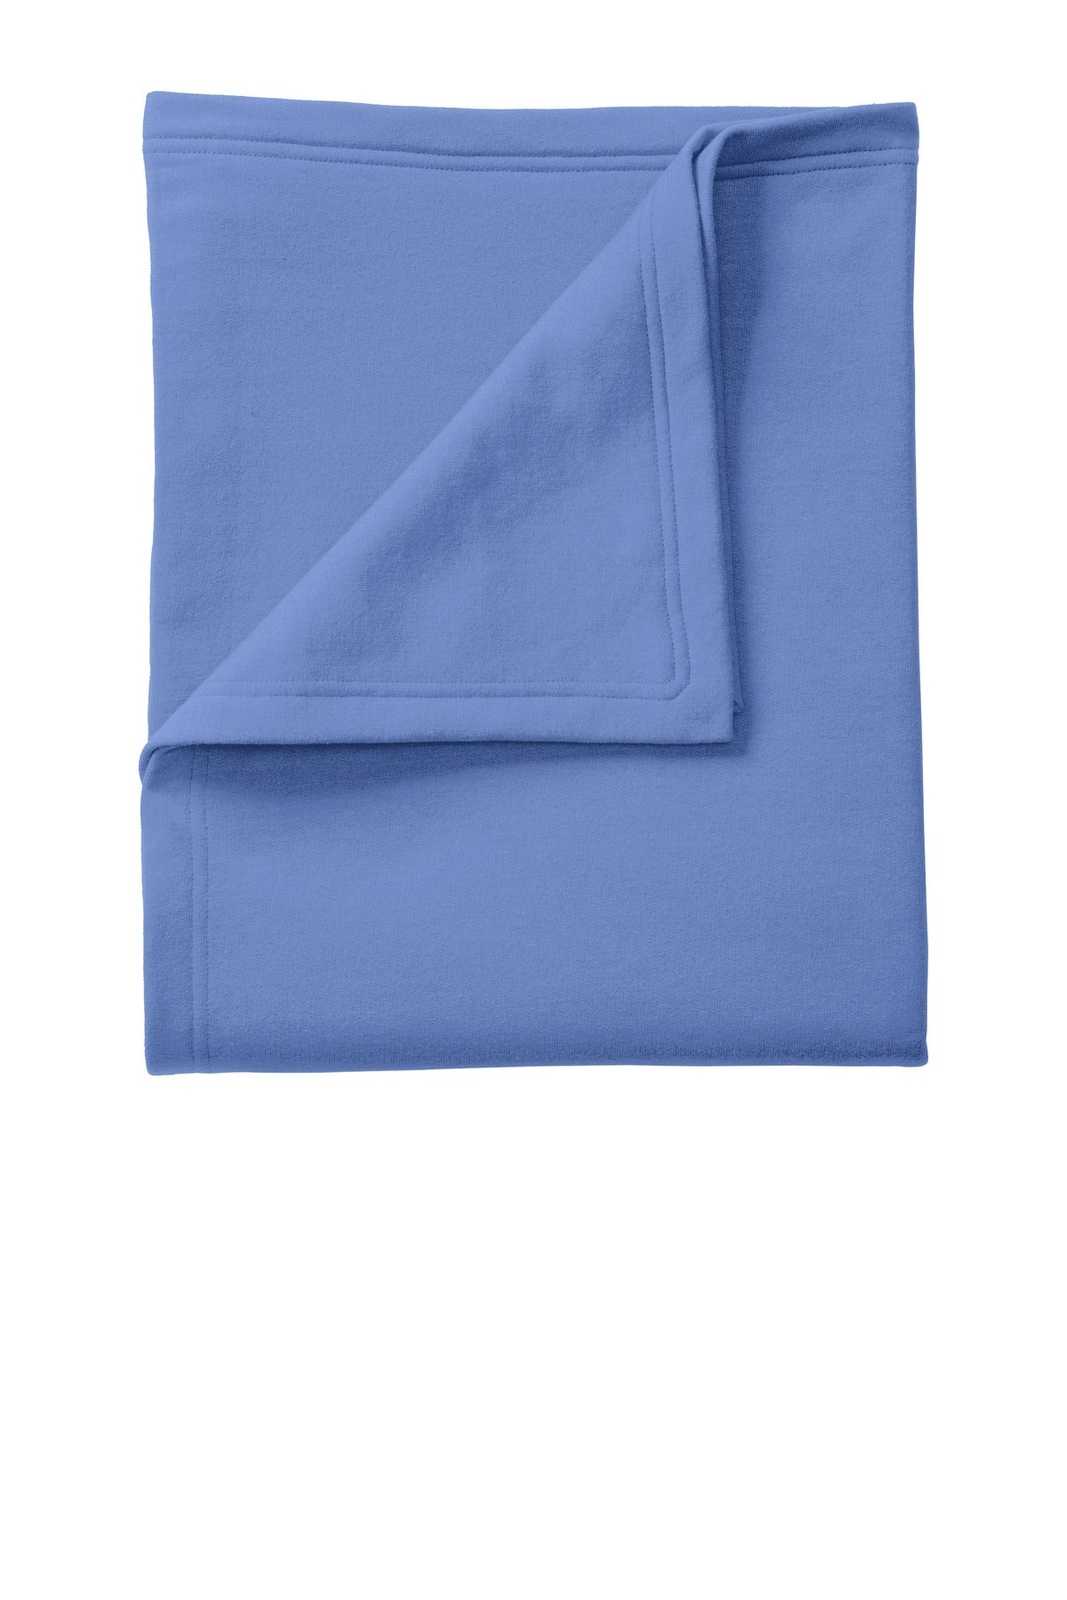 Port & Company BP78 Core Fleece Sweatshirt Blanket - Carolina Blue - HIT a Double - 1